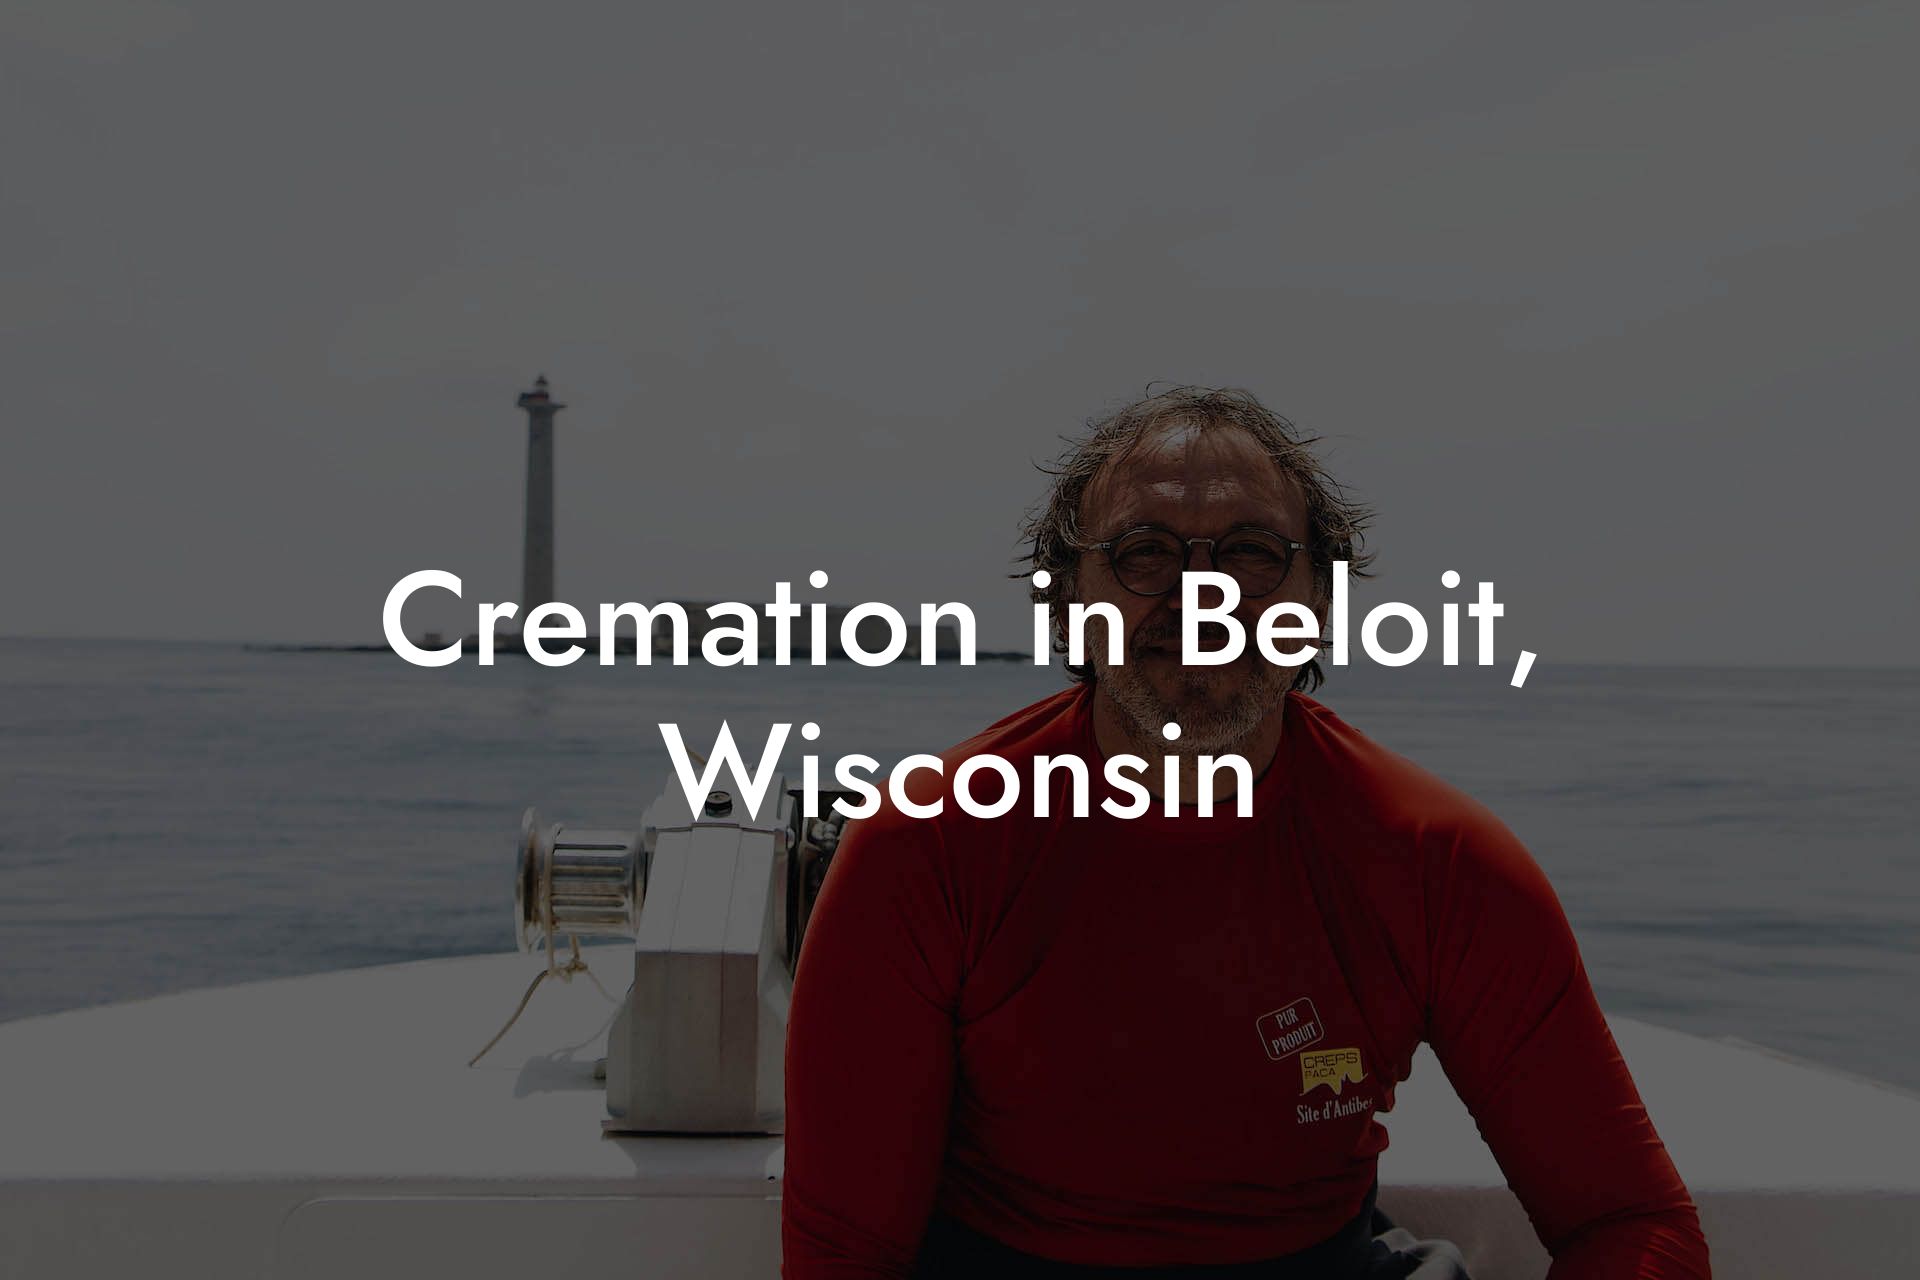 Cremation in Beloit, Wisconsin